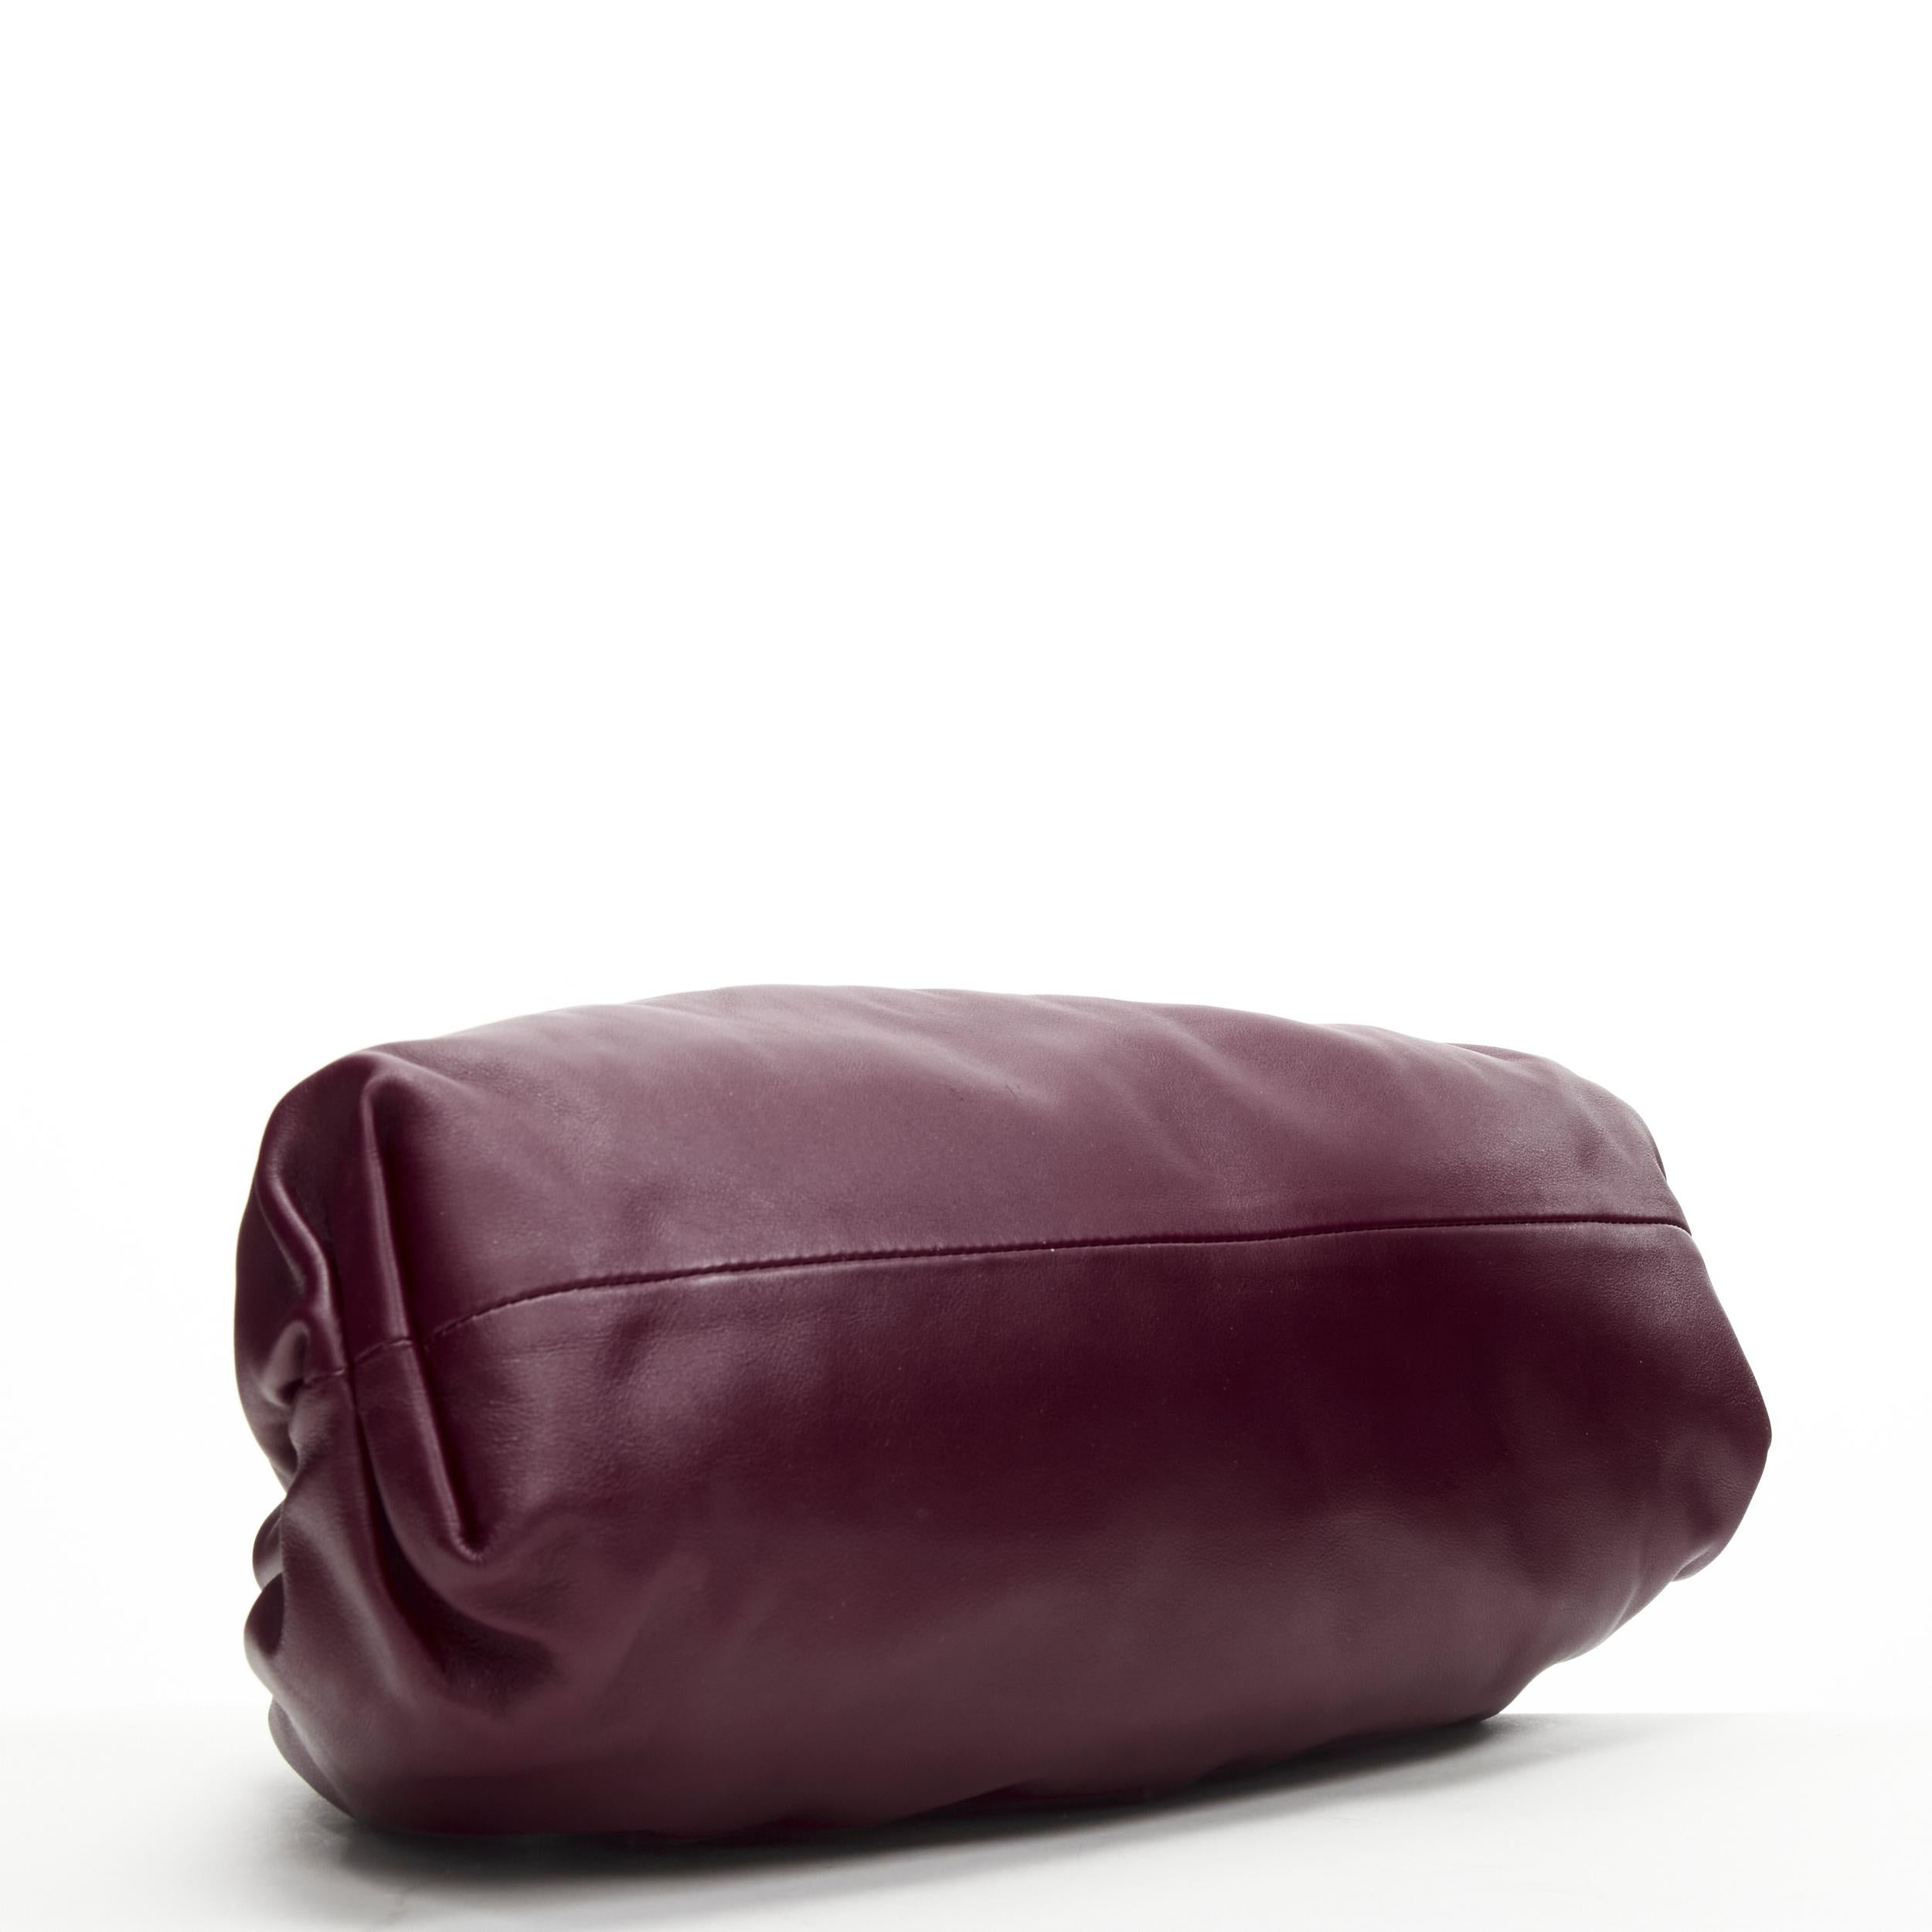 BOTTEGA VENETA The Pouch burgundy red soft lambskin leather clutch bag For Sale 1